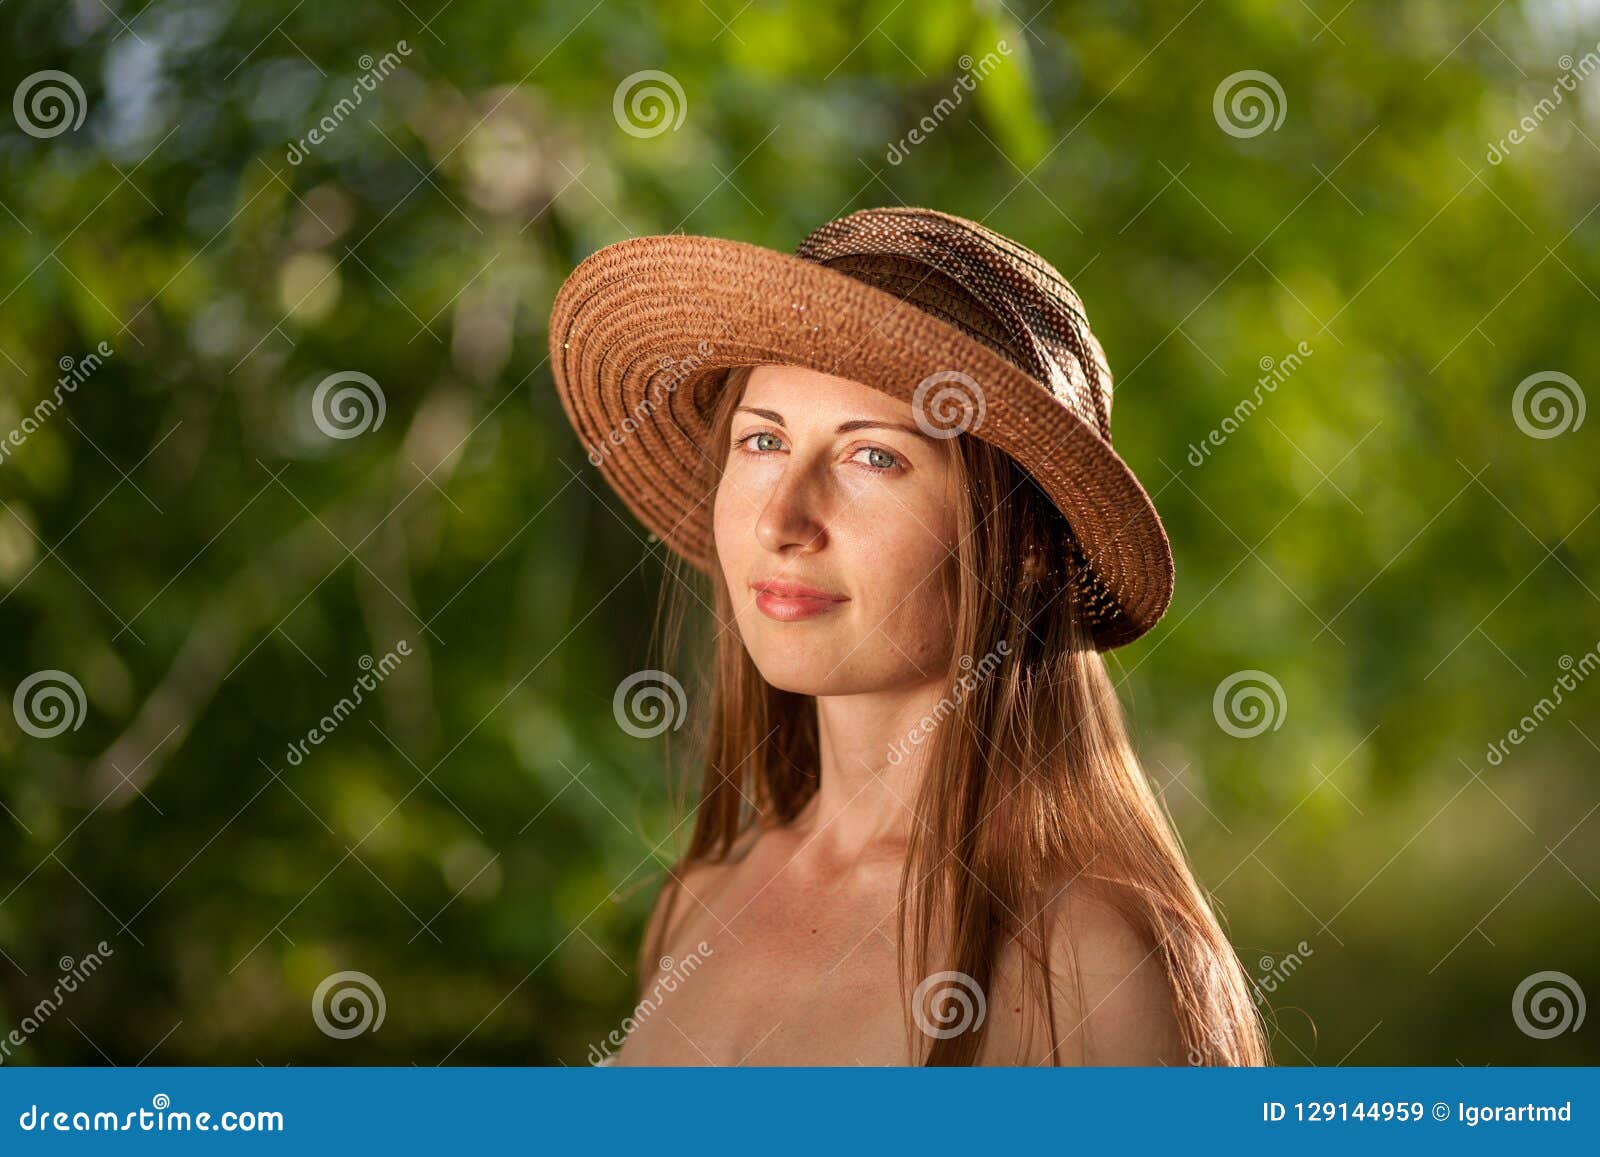 https://thumbs.dreamstime.com/z/portrait-beautiful-elegant-woman-light-white-dress-hat-standing-summer-park-portrait-beautiful-elegant-129144959.jpg